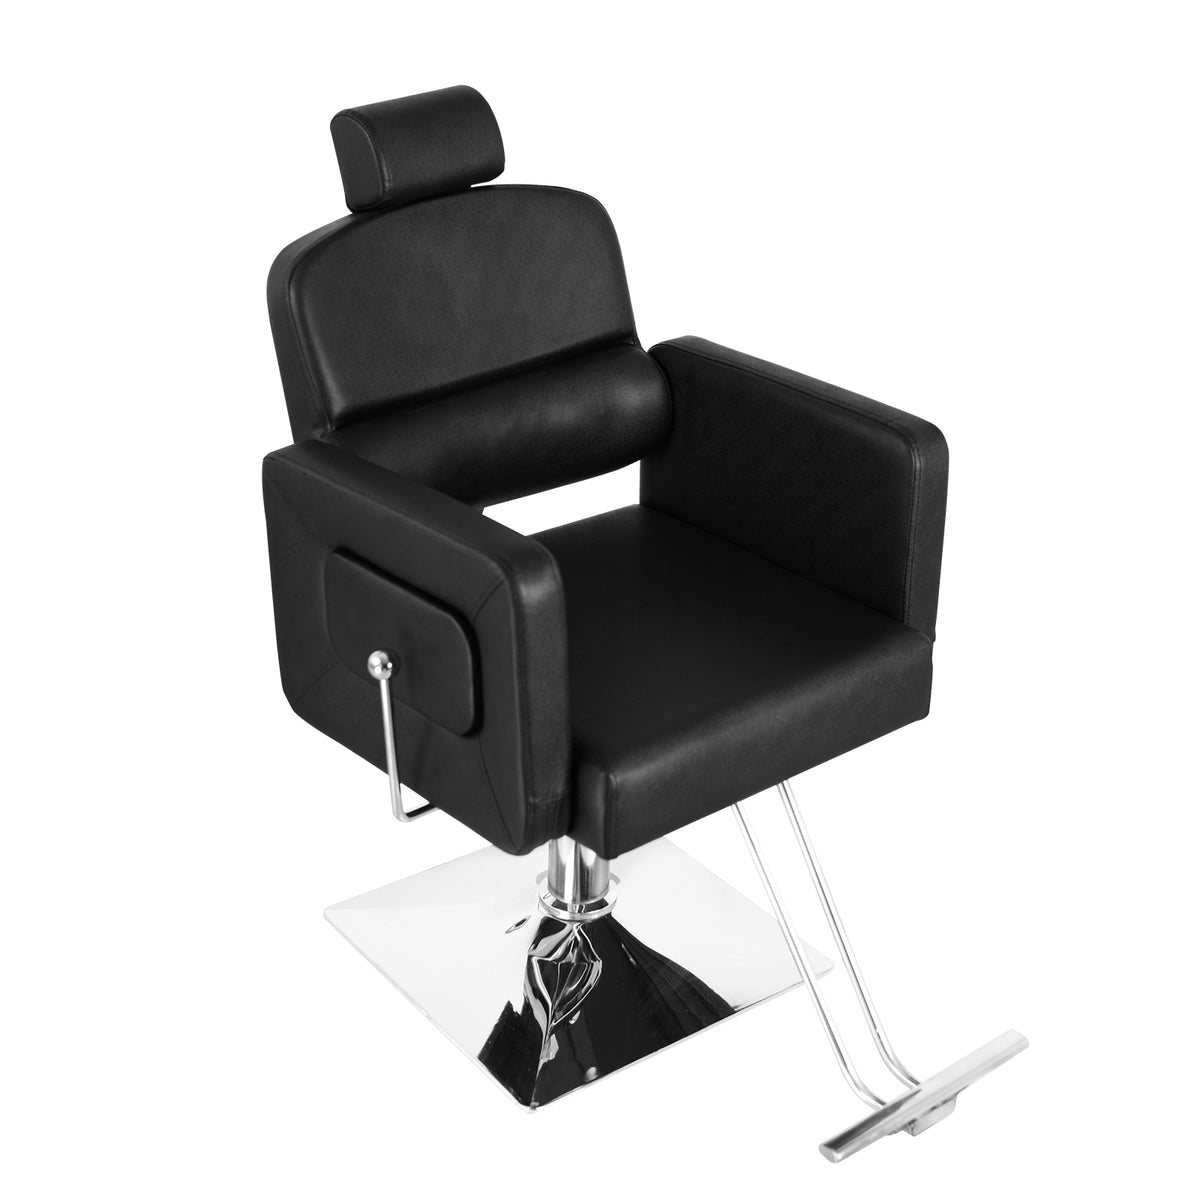 OmySalon All Purpose Chair Reclining for Salon, Hydraulic Barber Chair Heavy Duty for Hair Stylist